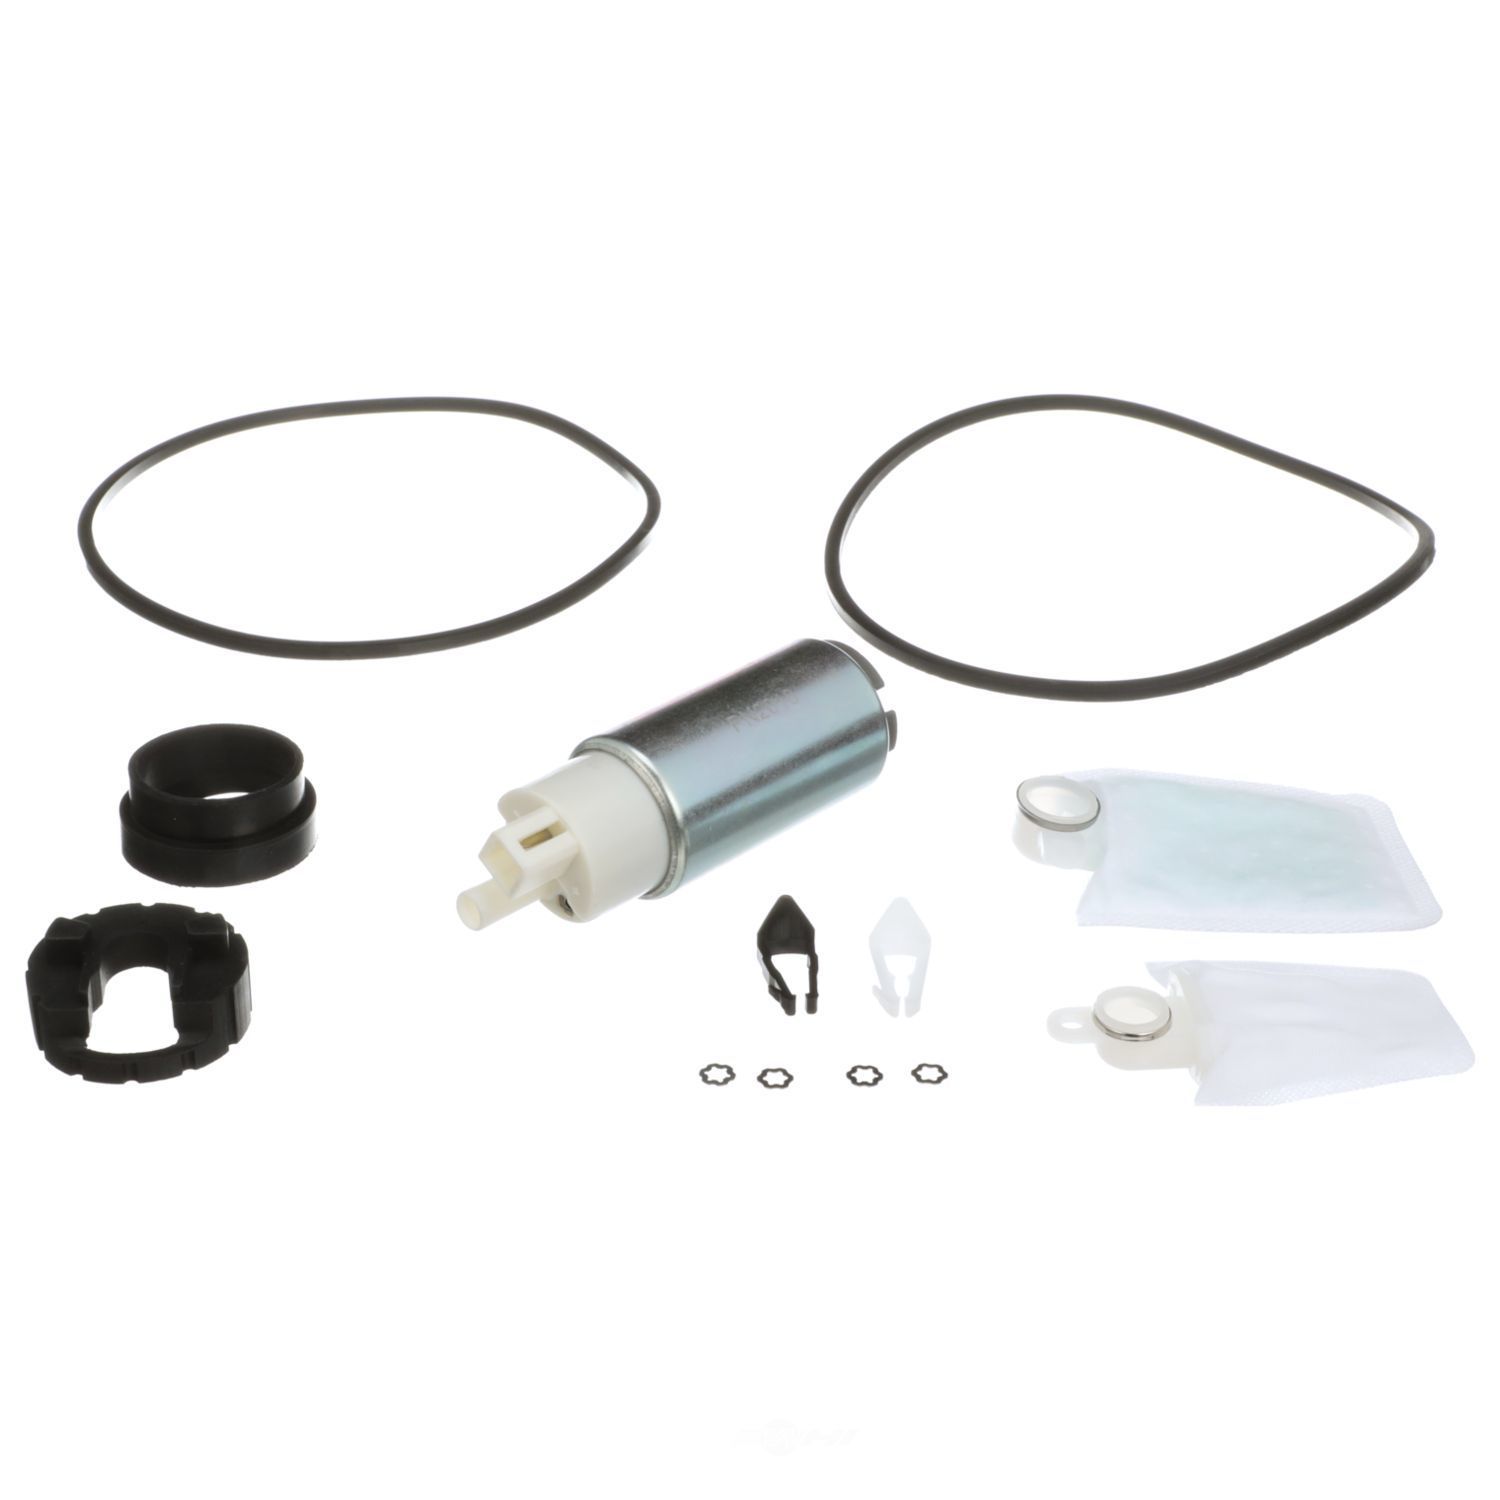 SPARTA - Fuel Pump and Strainer Set - SA1 PN2018